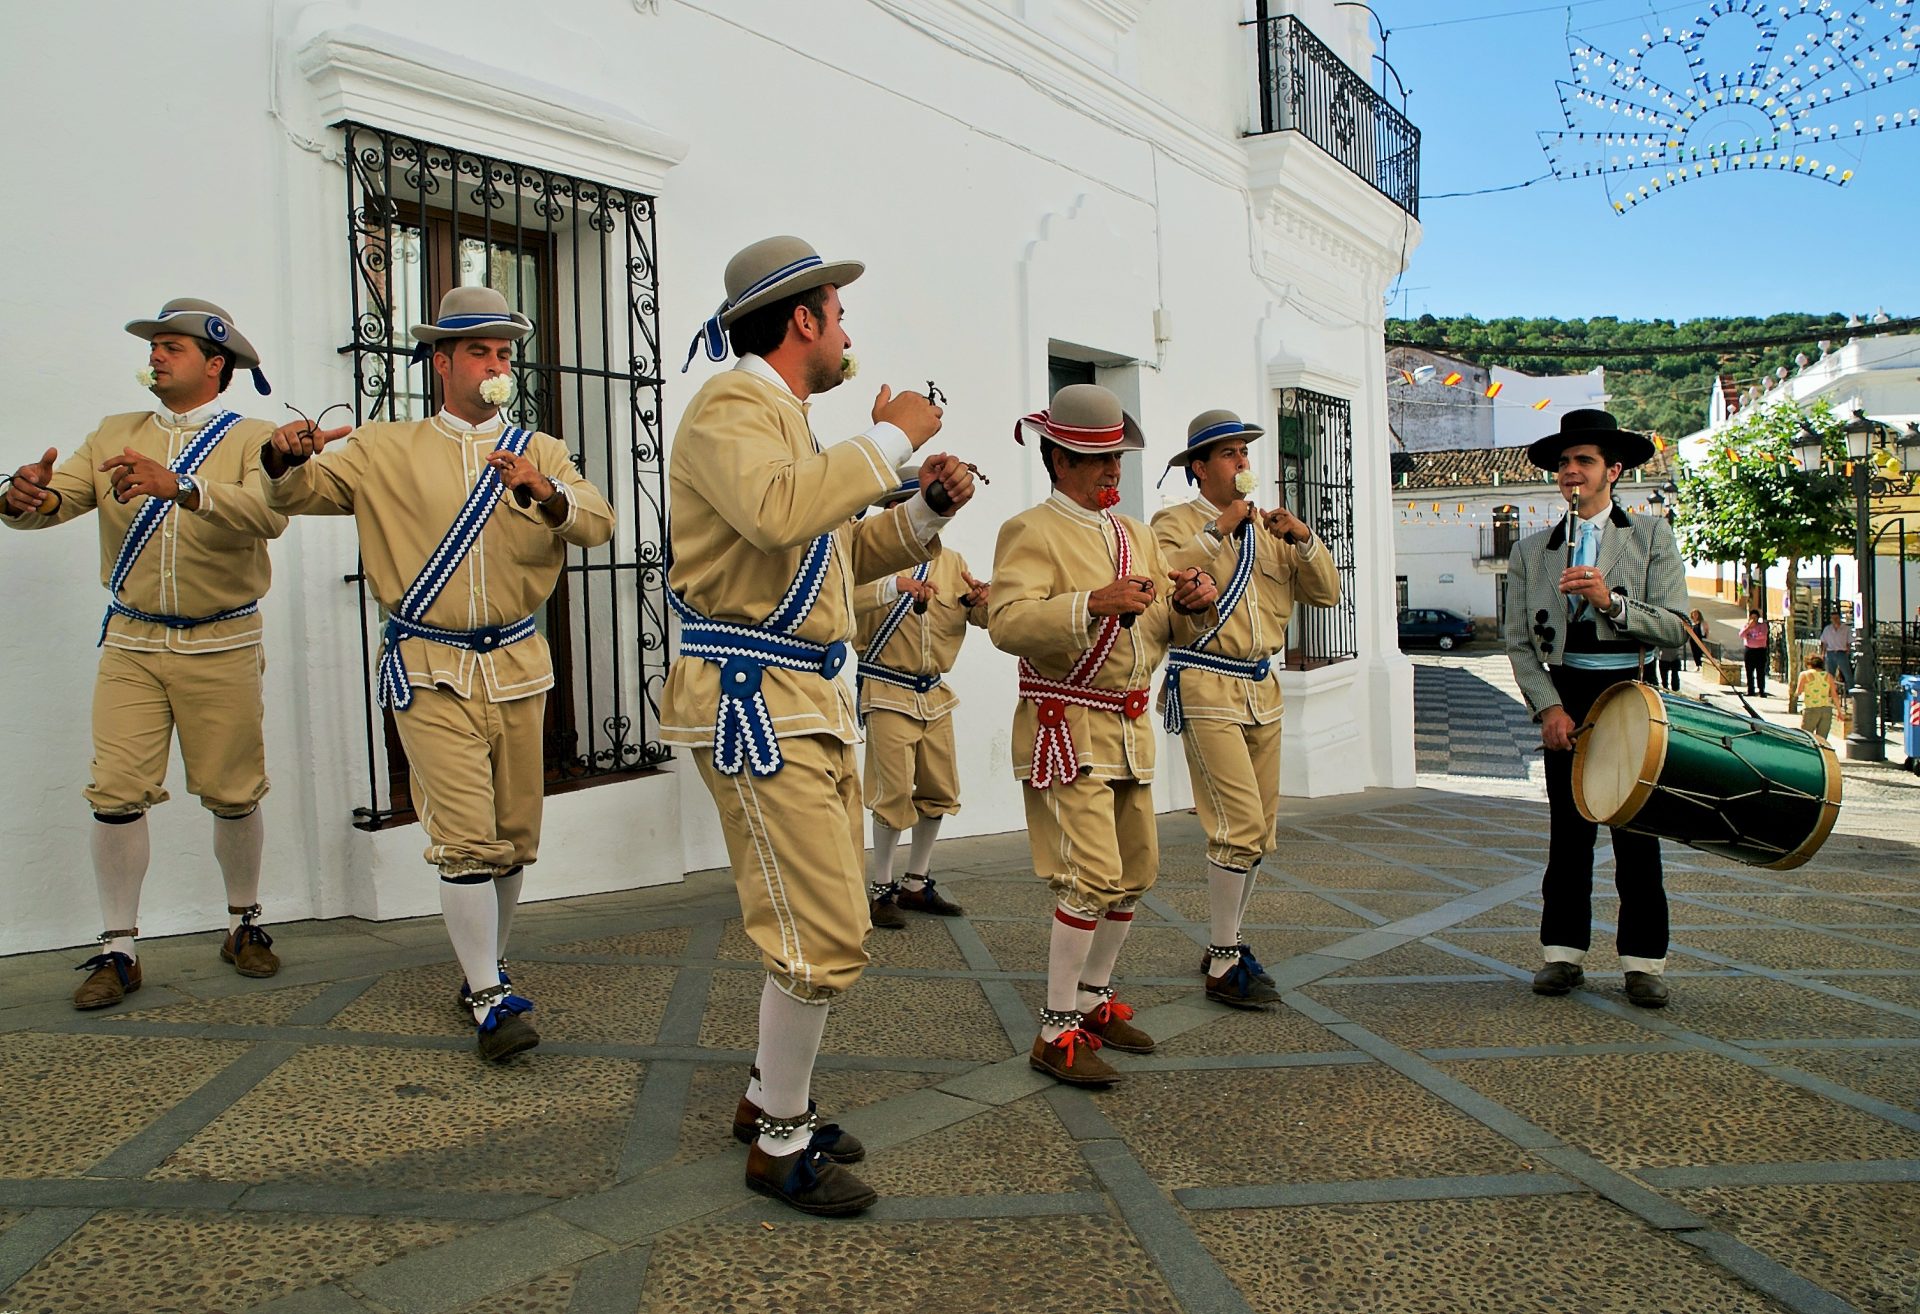 Los Danzantes performing during Corpus Christi (credit: Adolfobrigido)